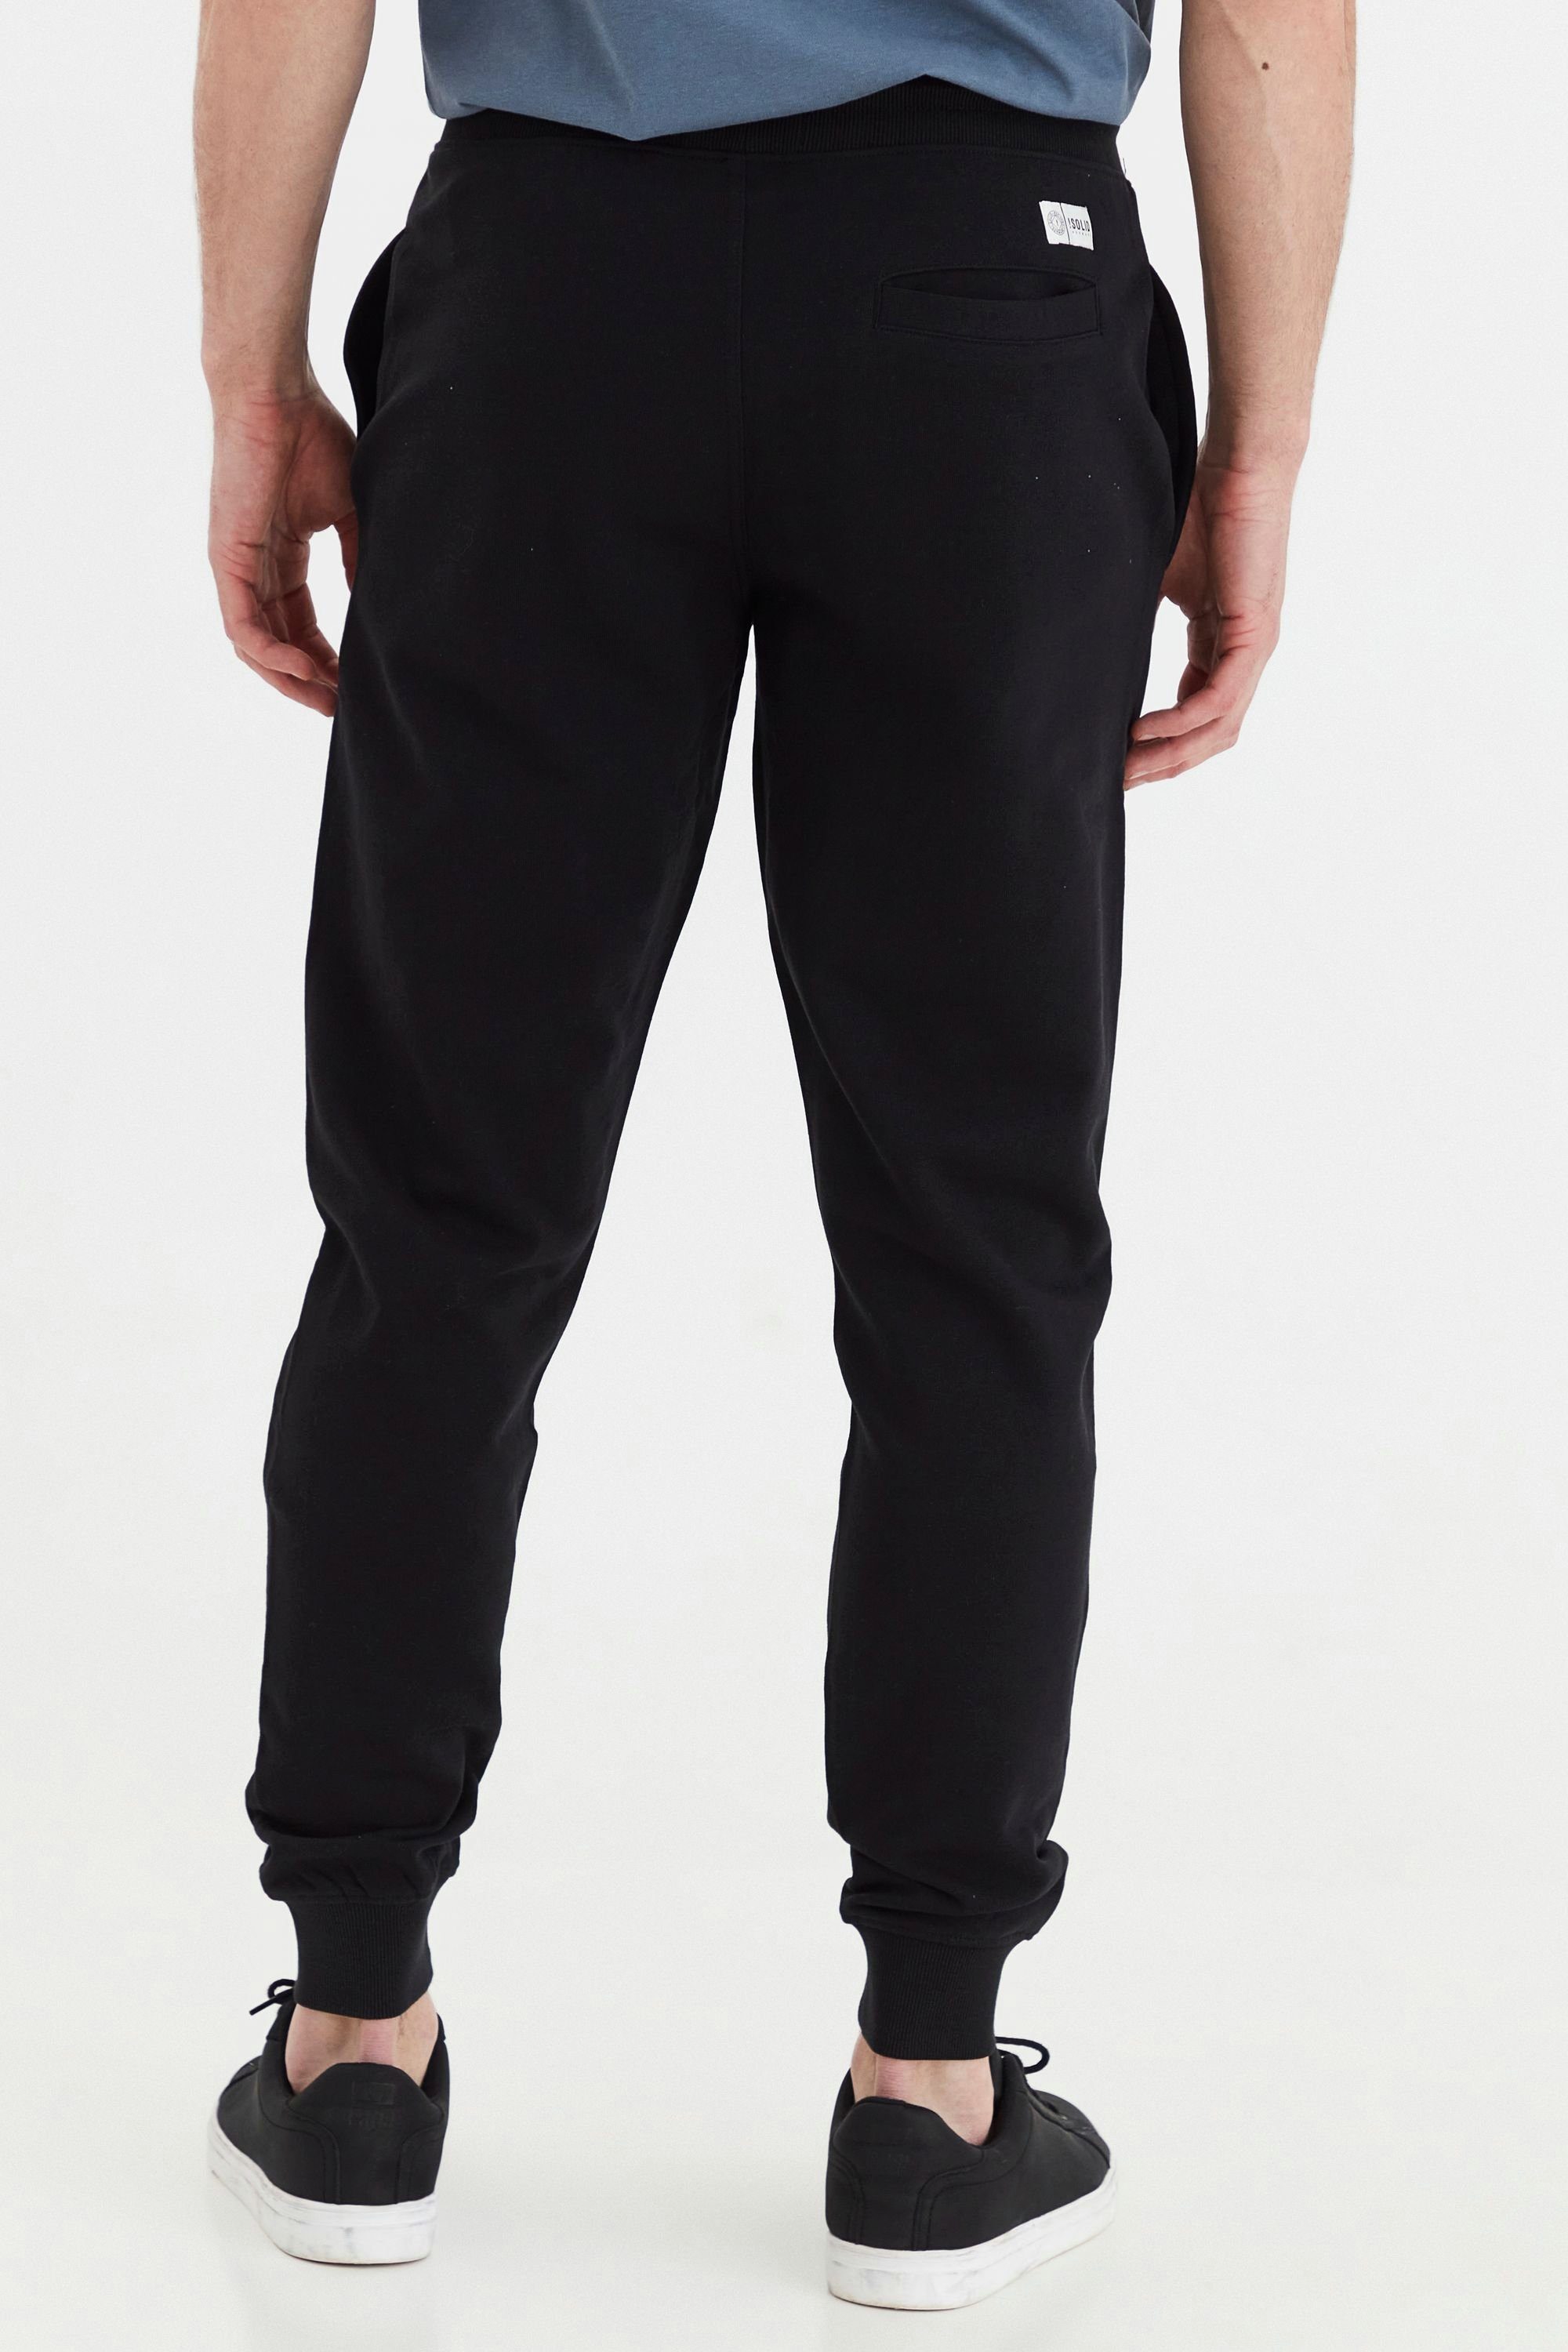 lange Black !Solid Sweatpants SDTambert Jogginghose (194007)